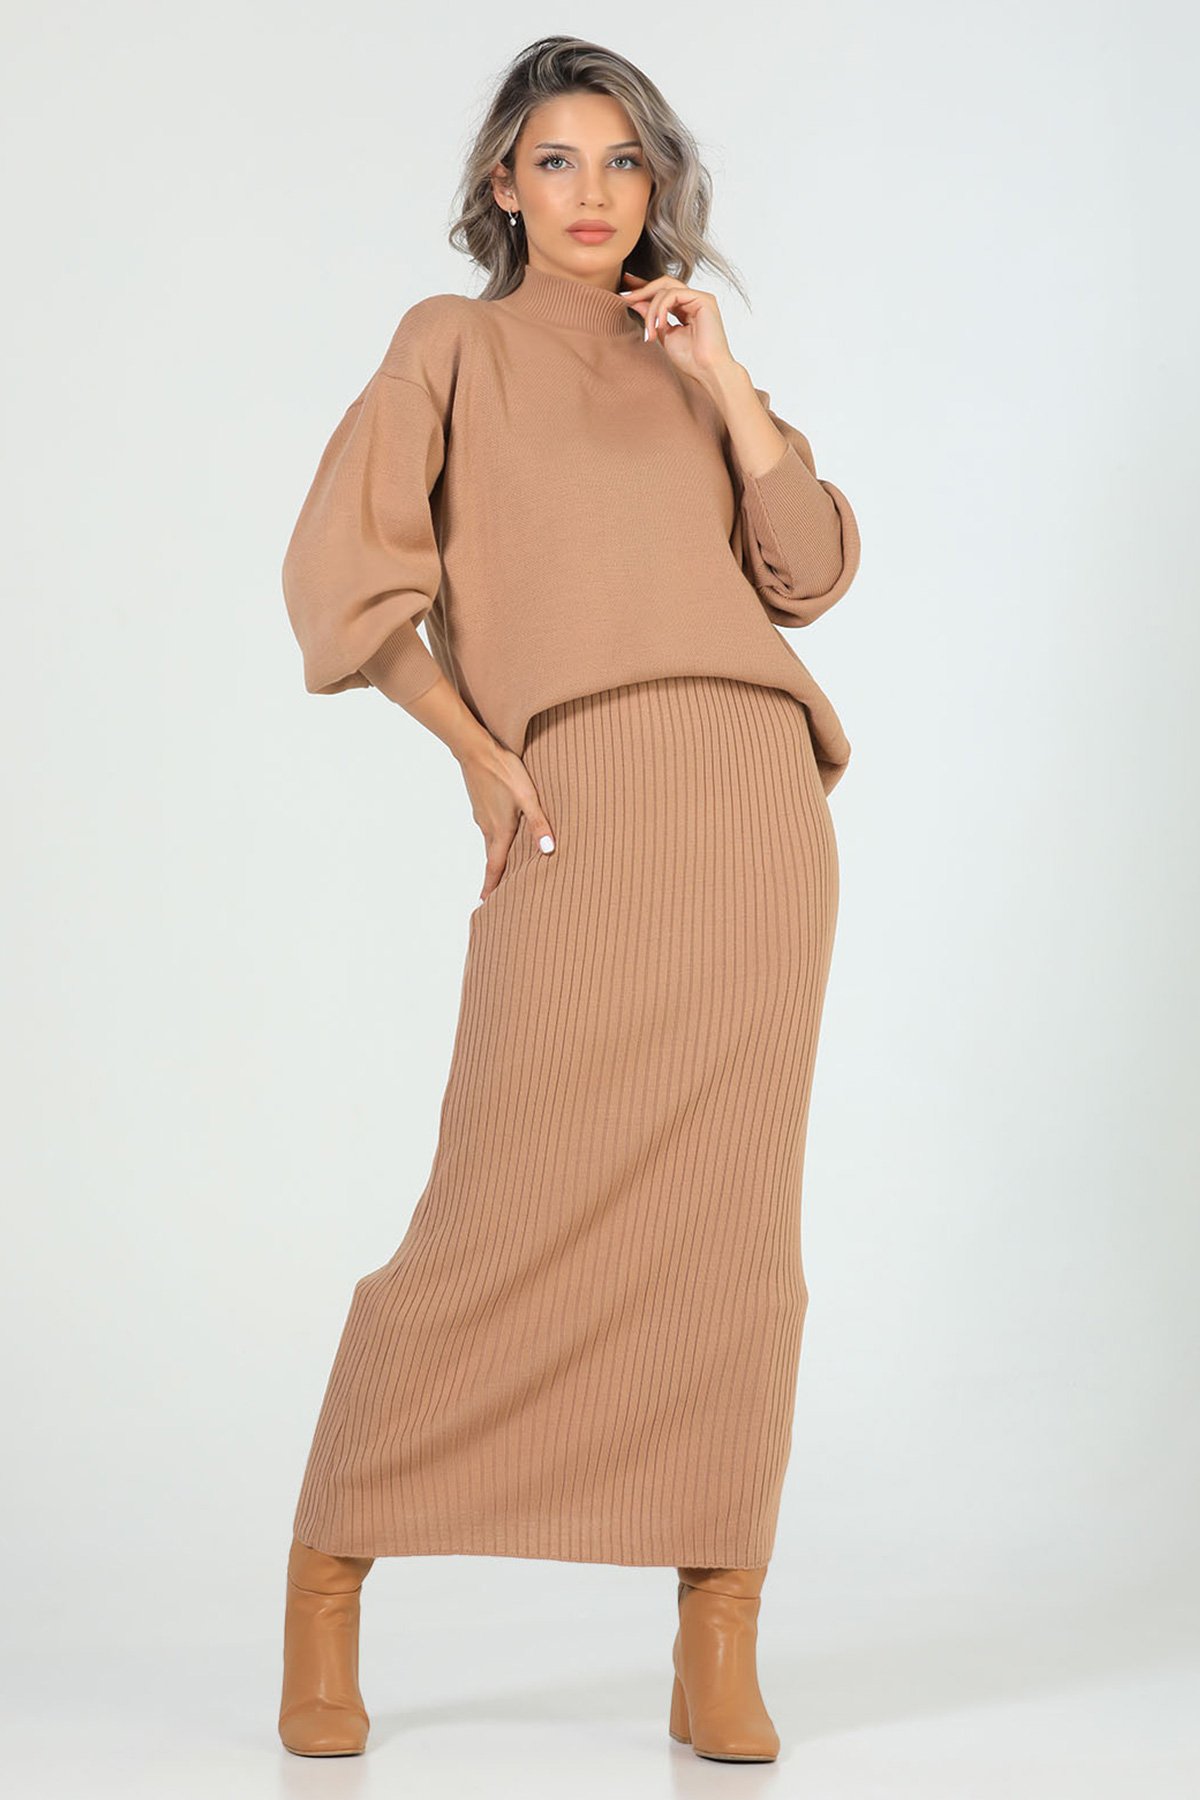 Kadın Kazak Elbise Triko İkili Takım Bisküvi 504790 - tozlu.com